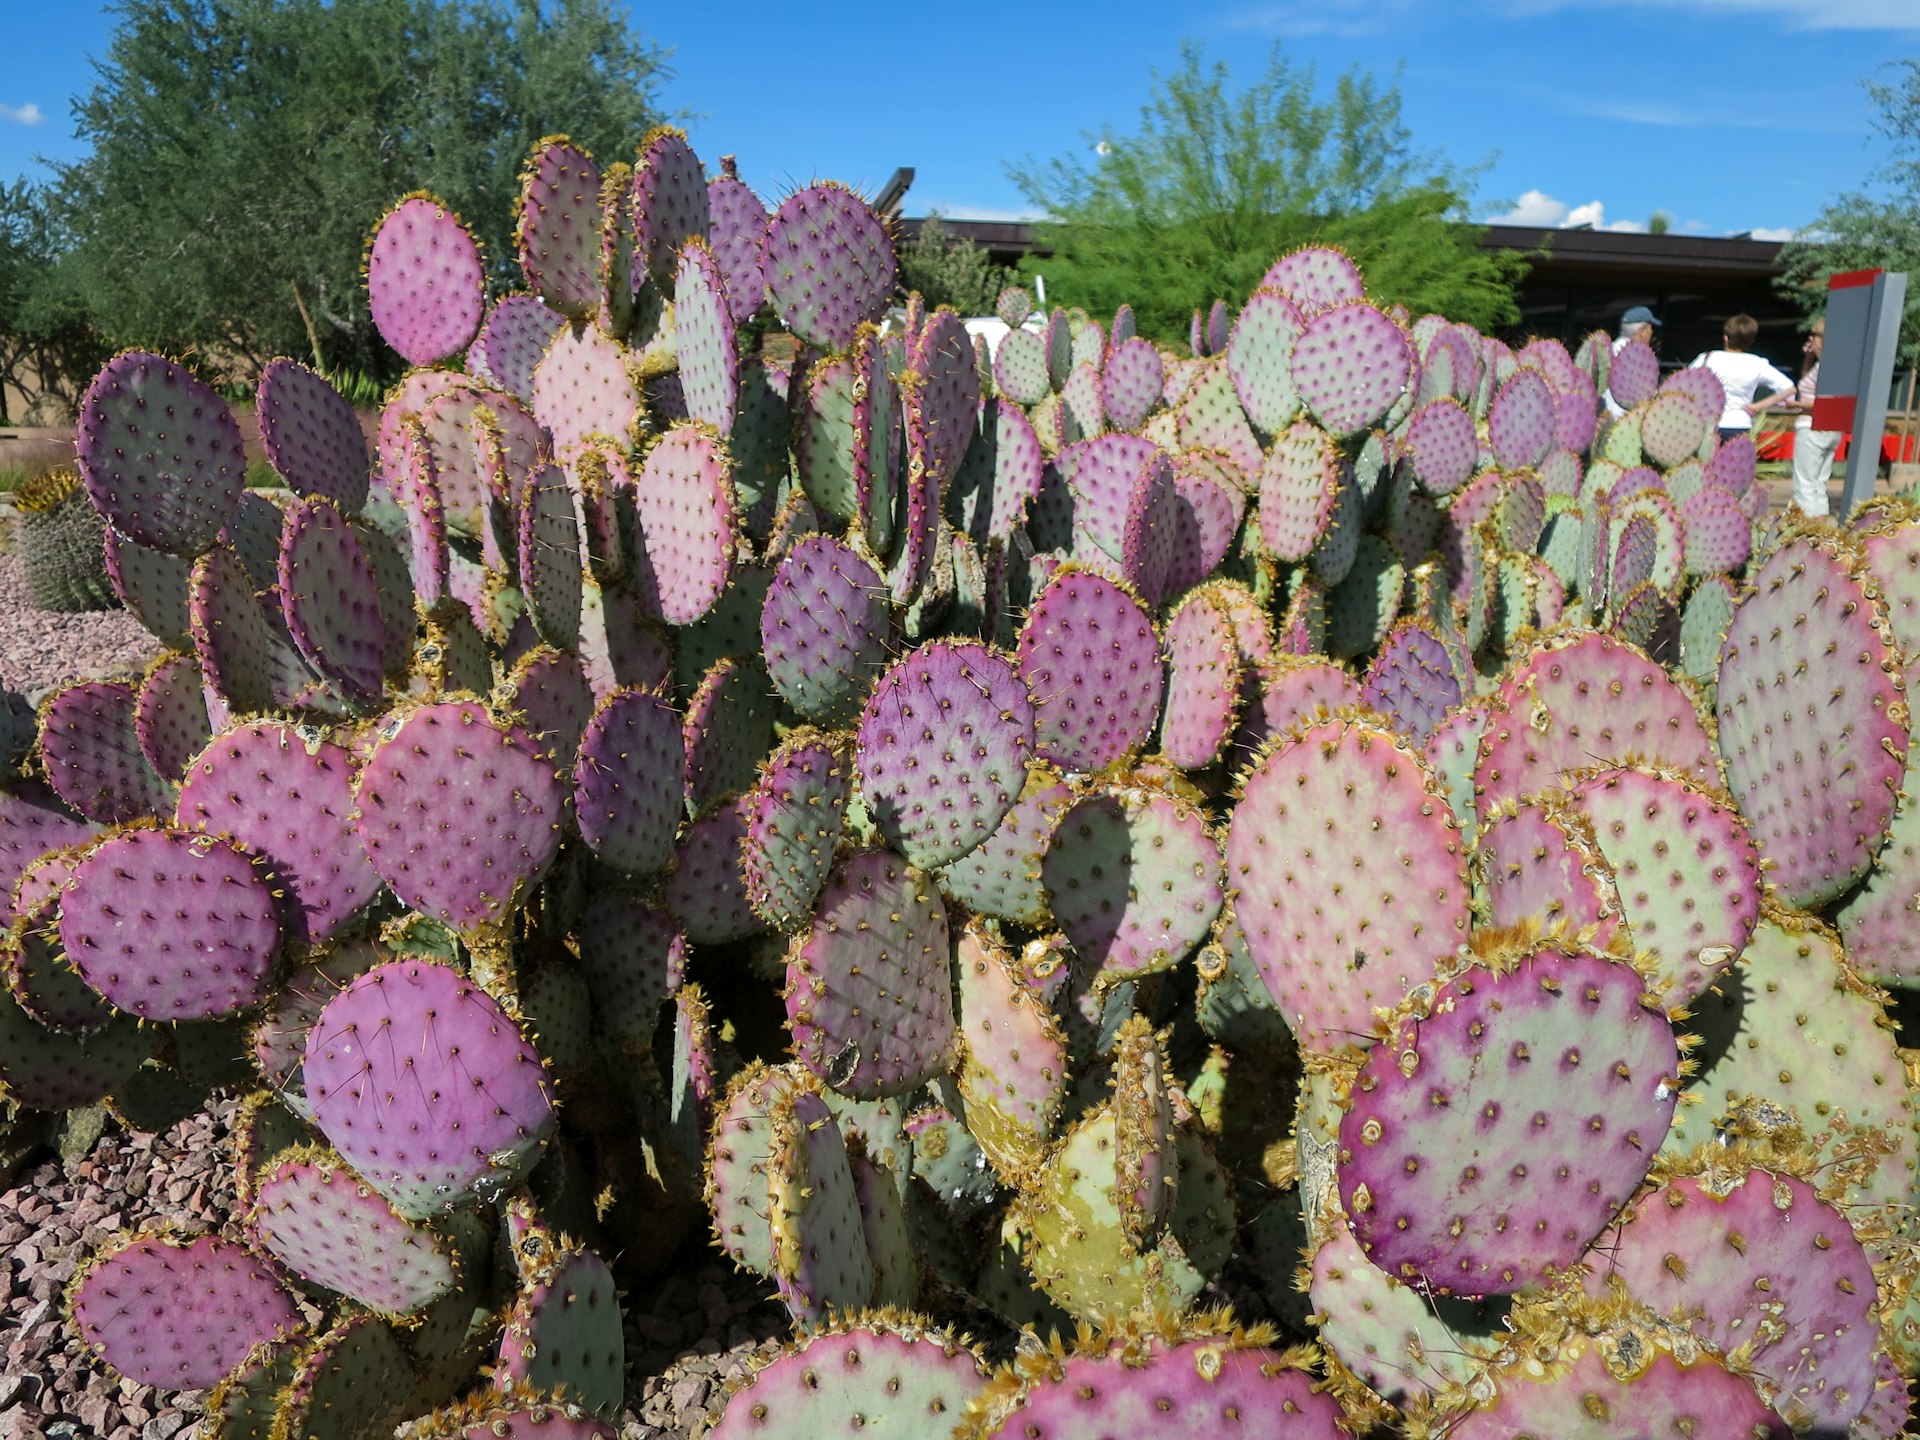 Prickly pear cactus in Arizona